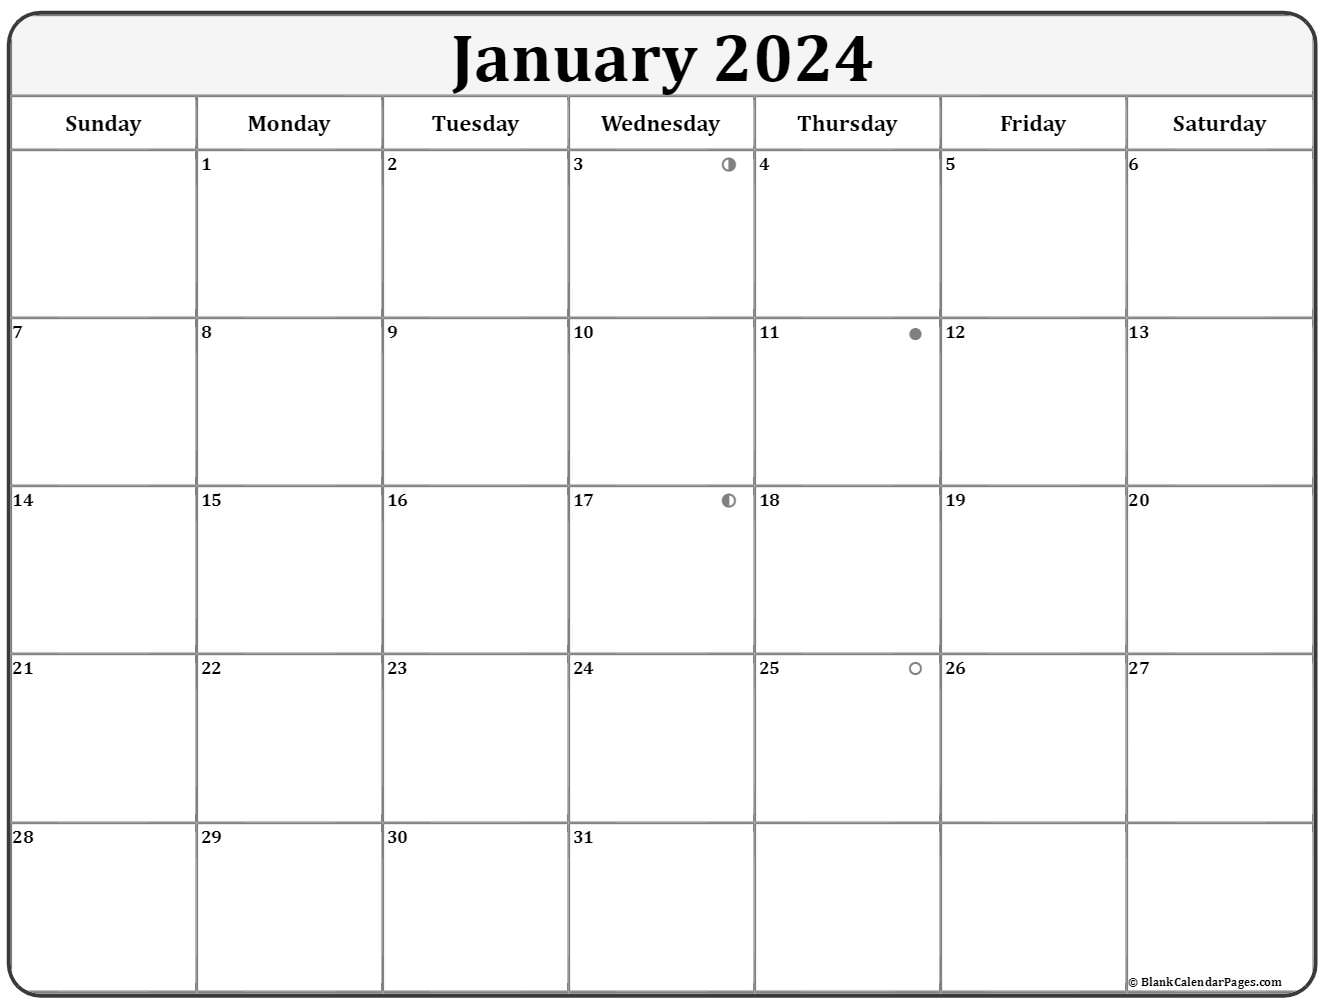 Moonrise Calendar 2022 January 2022 Lunar Calendar | Moon Phase Calendar